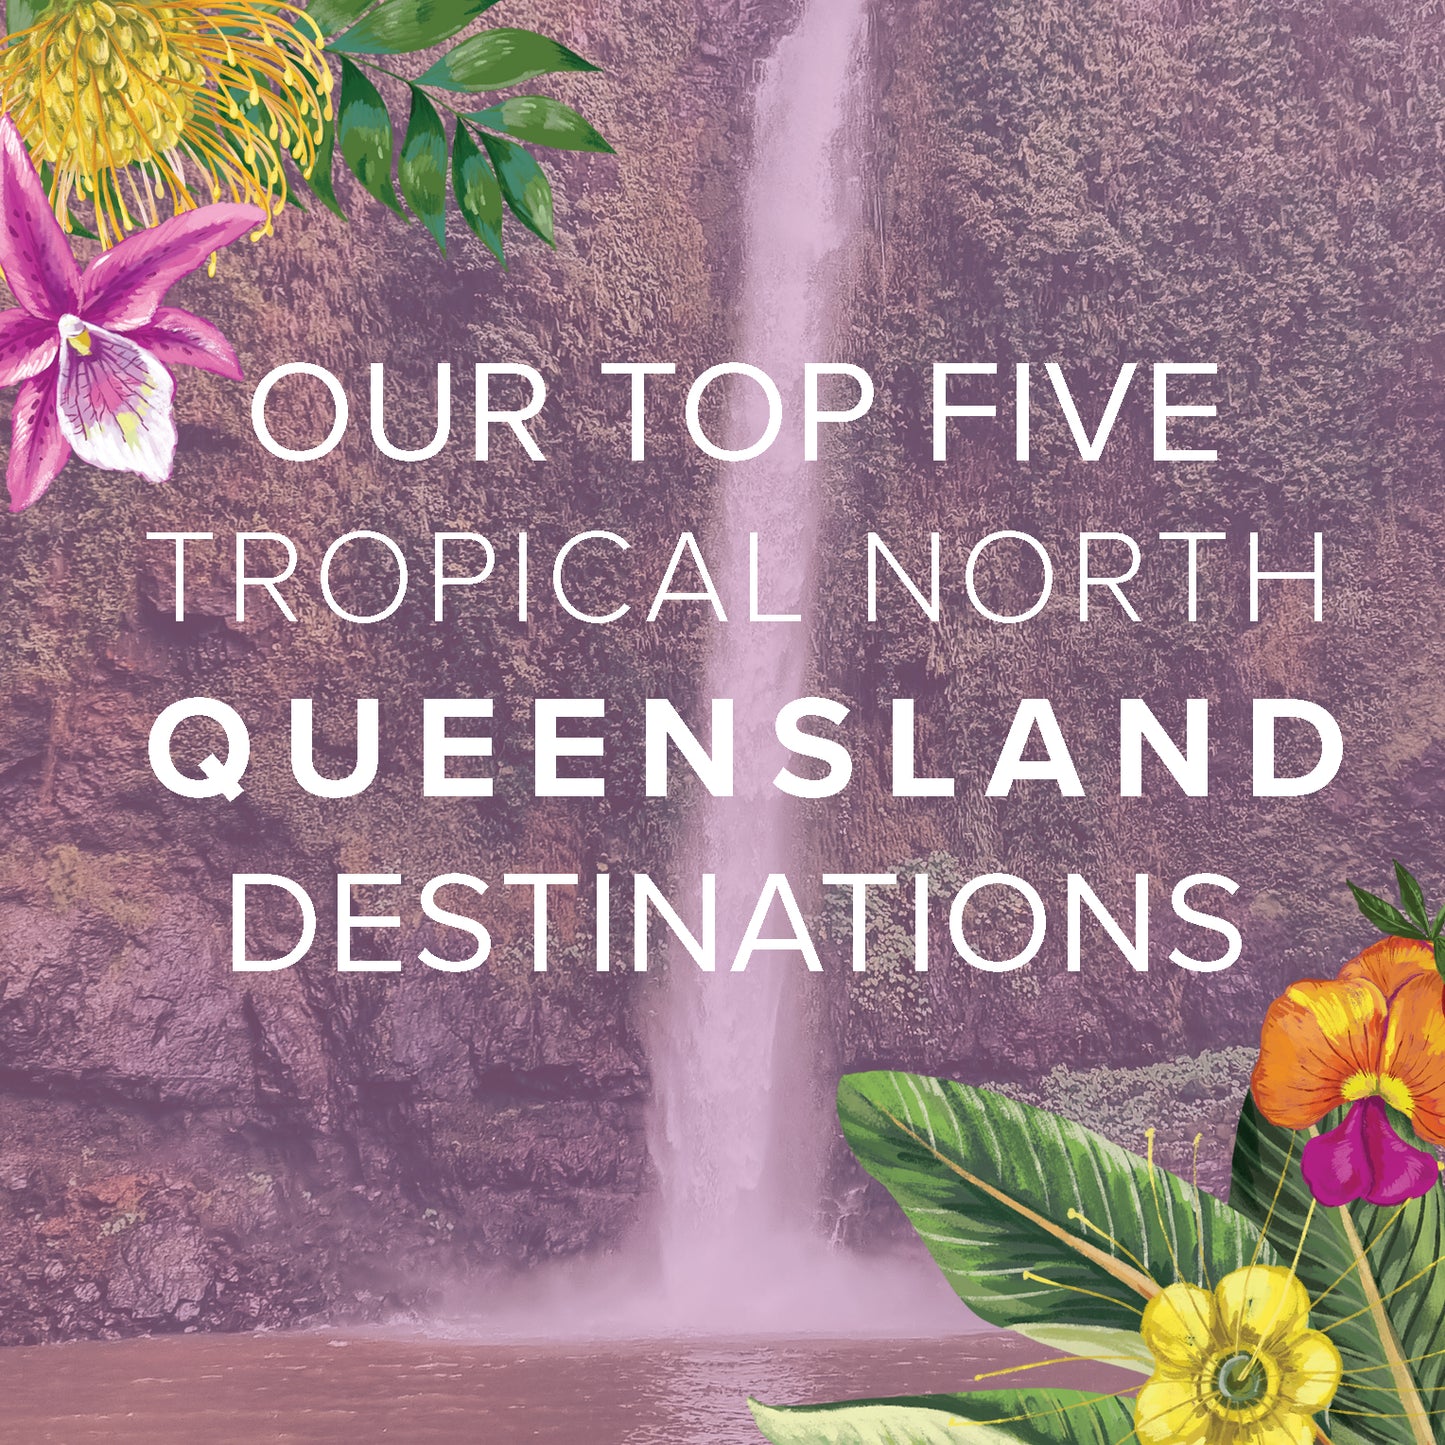 Our Top 5 Tropical North Queensland Destinations